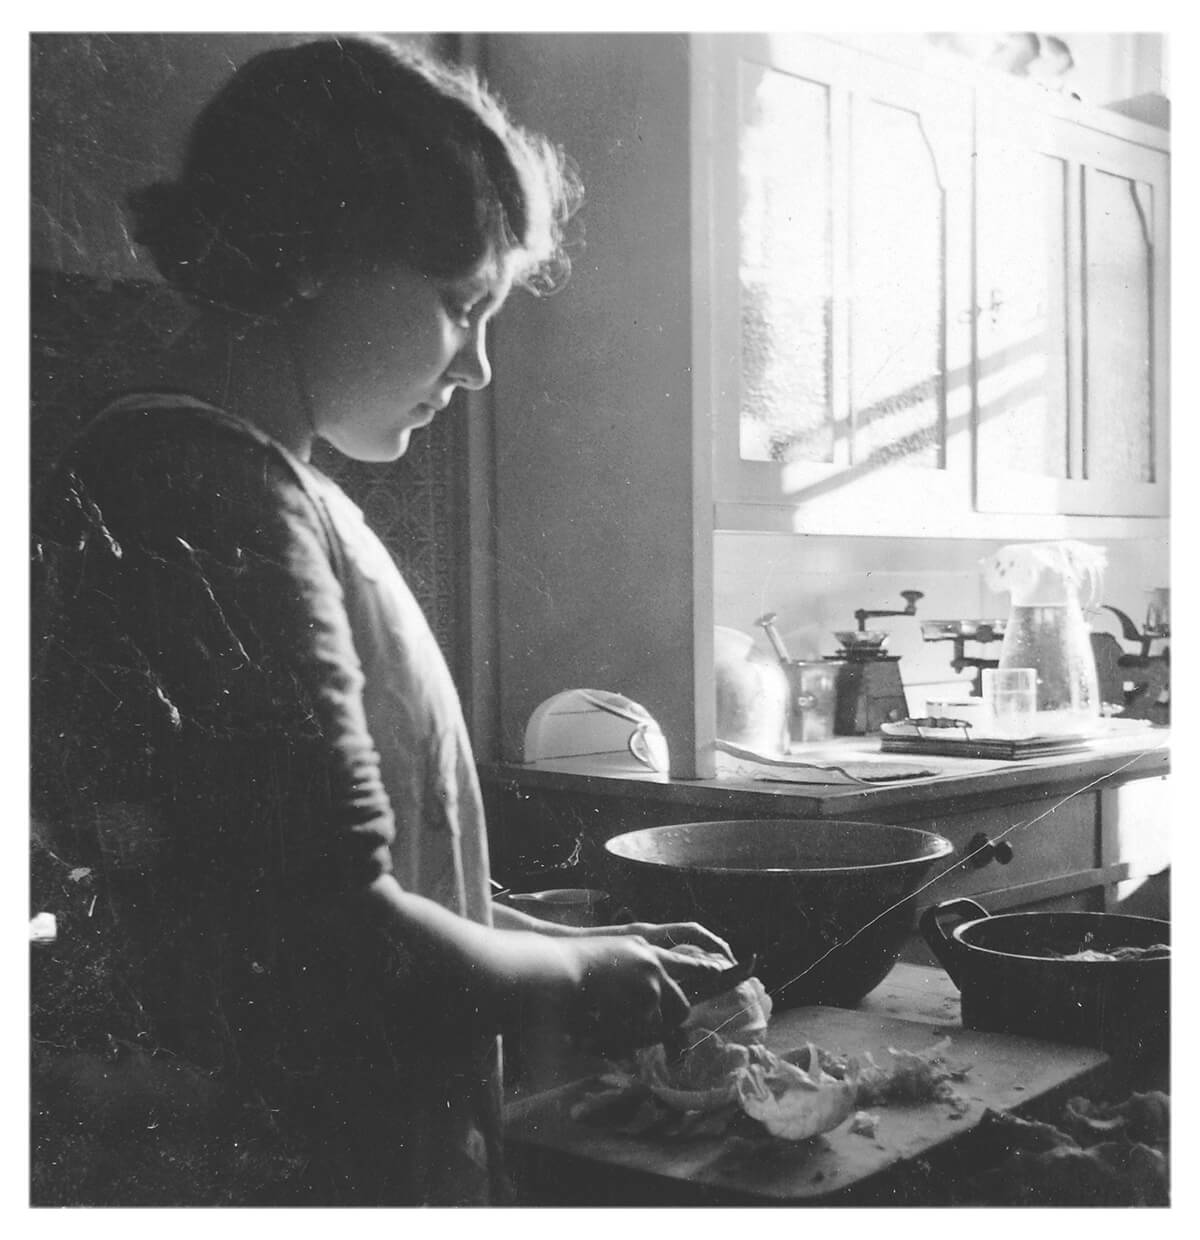 Hungarian farming woman preparing food in a kitchen